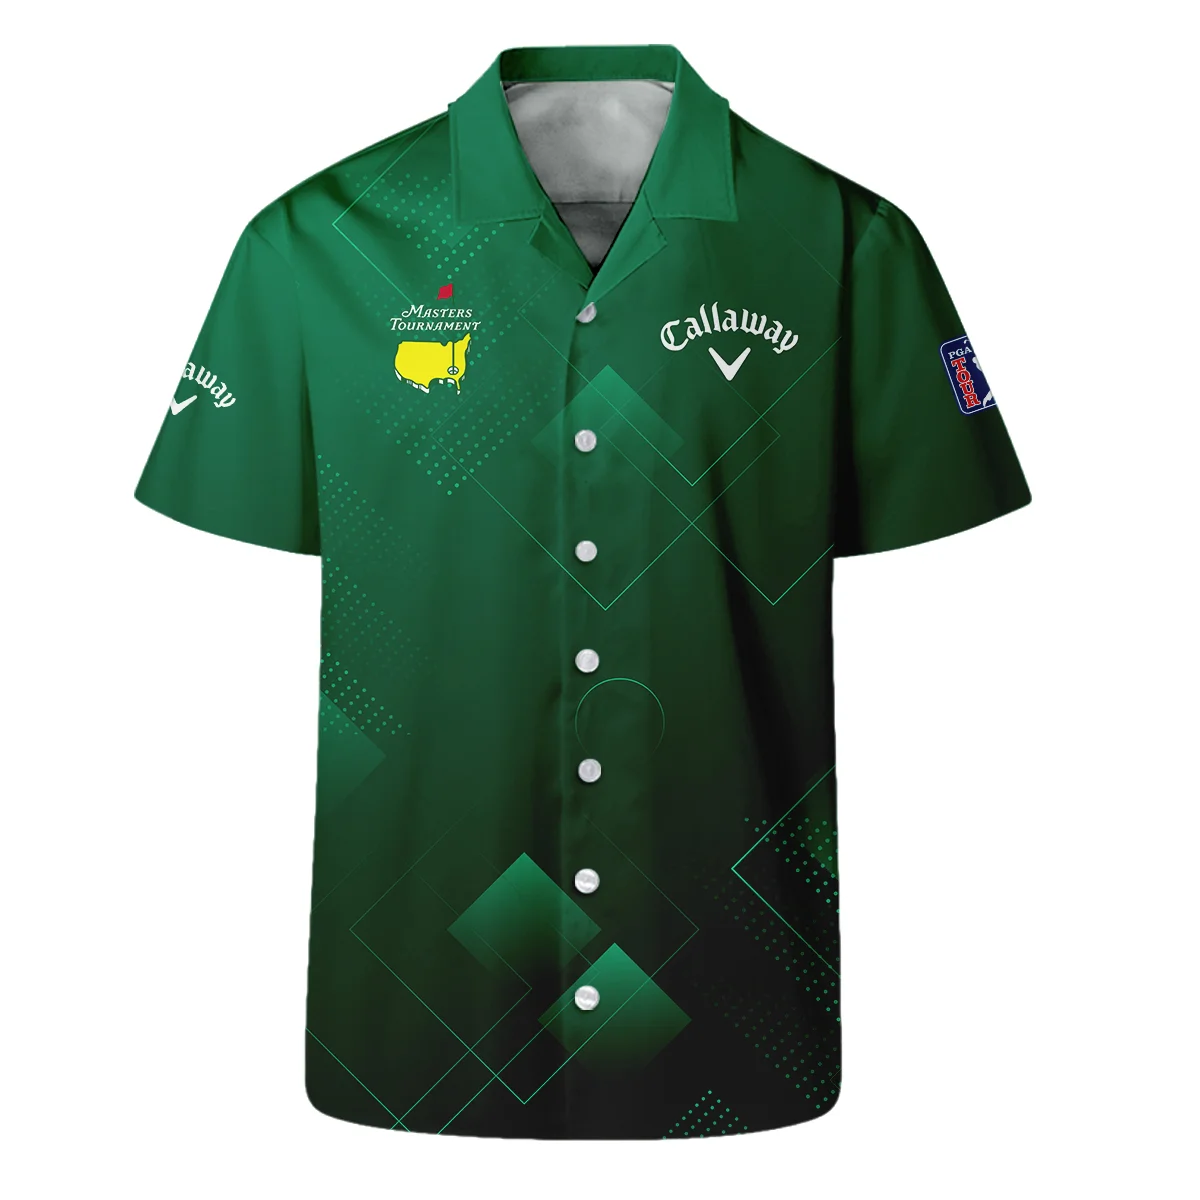 Masters Tournament Callaway Hawaiian Shirt Golf Sports Green Abstract Geometric Oversized Hawaiian Shirt